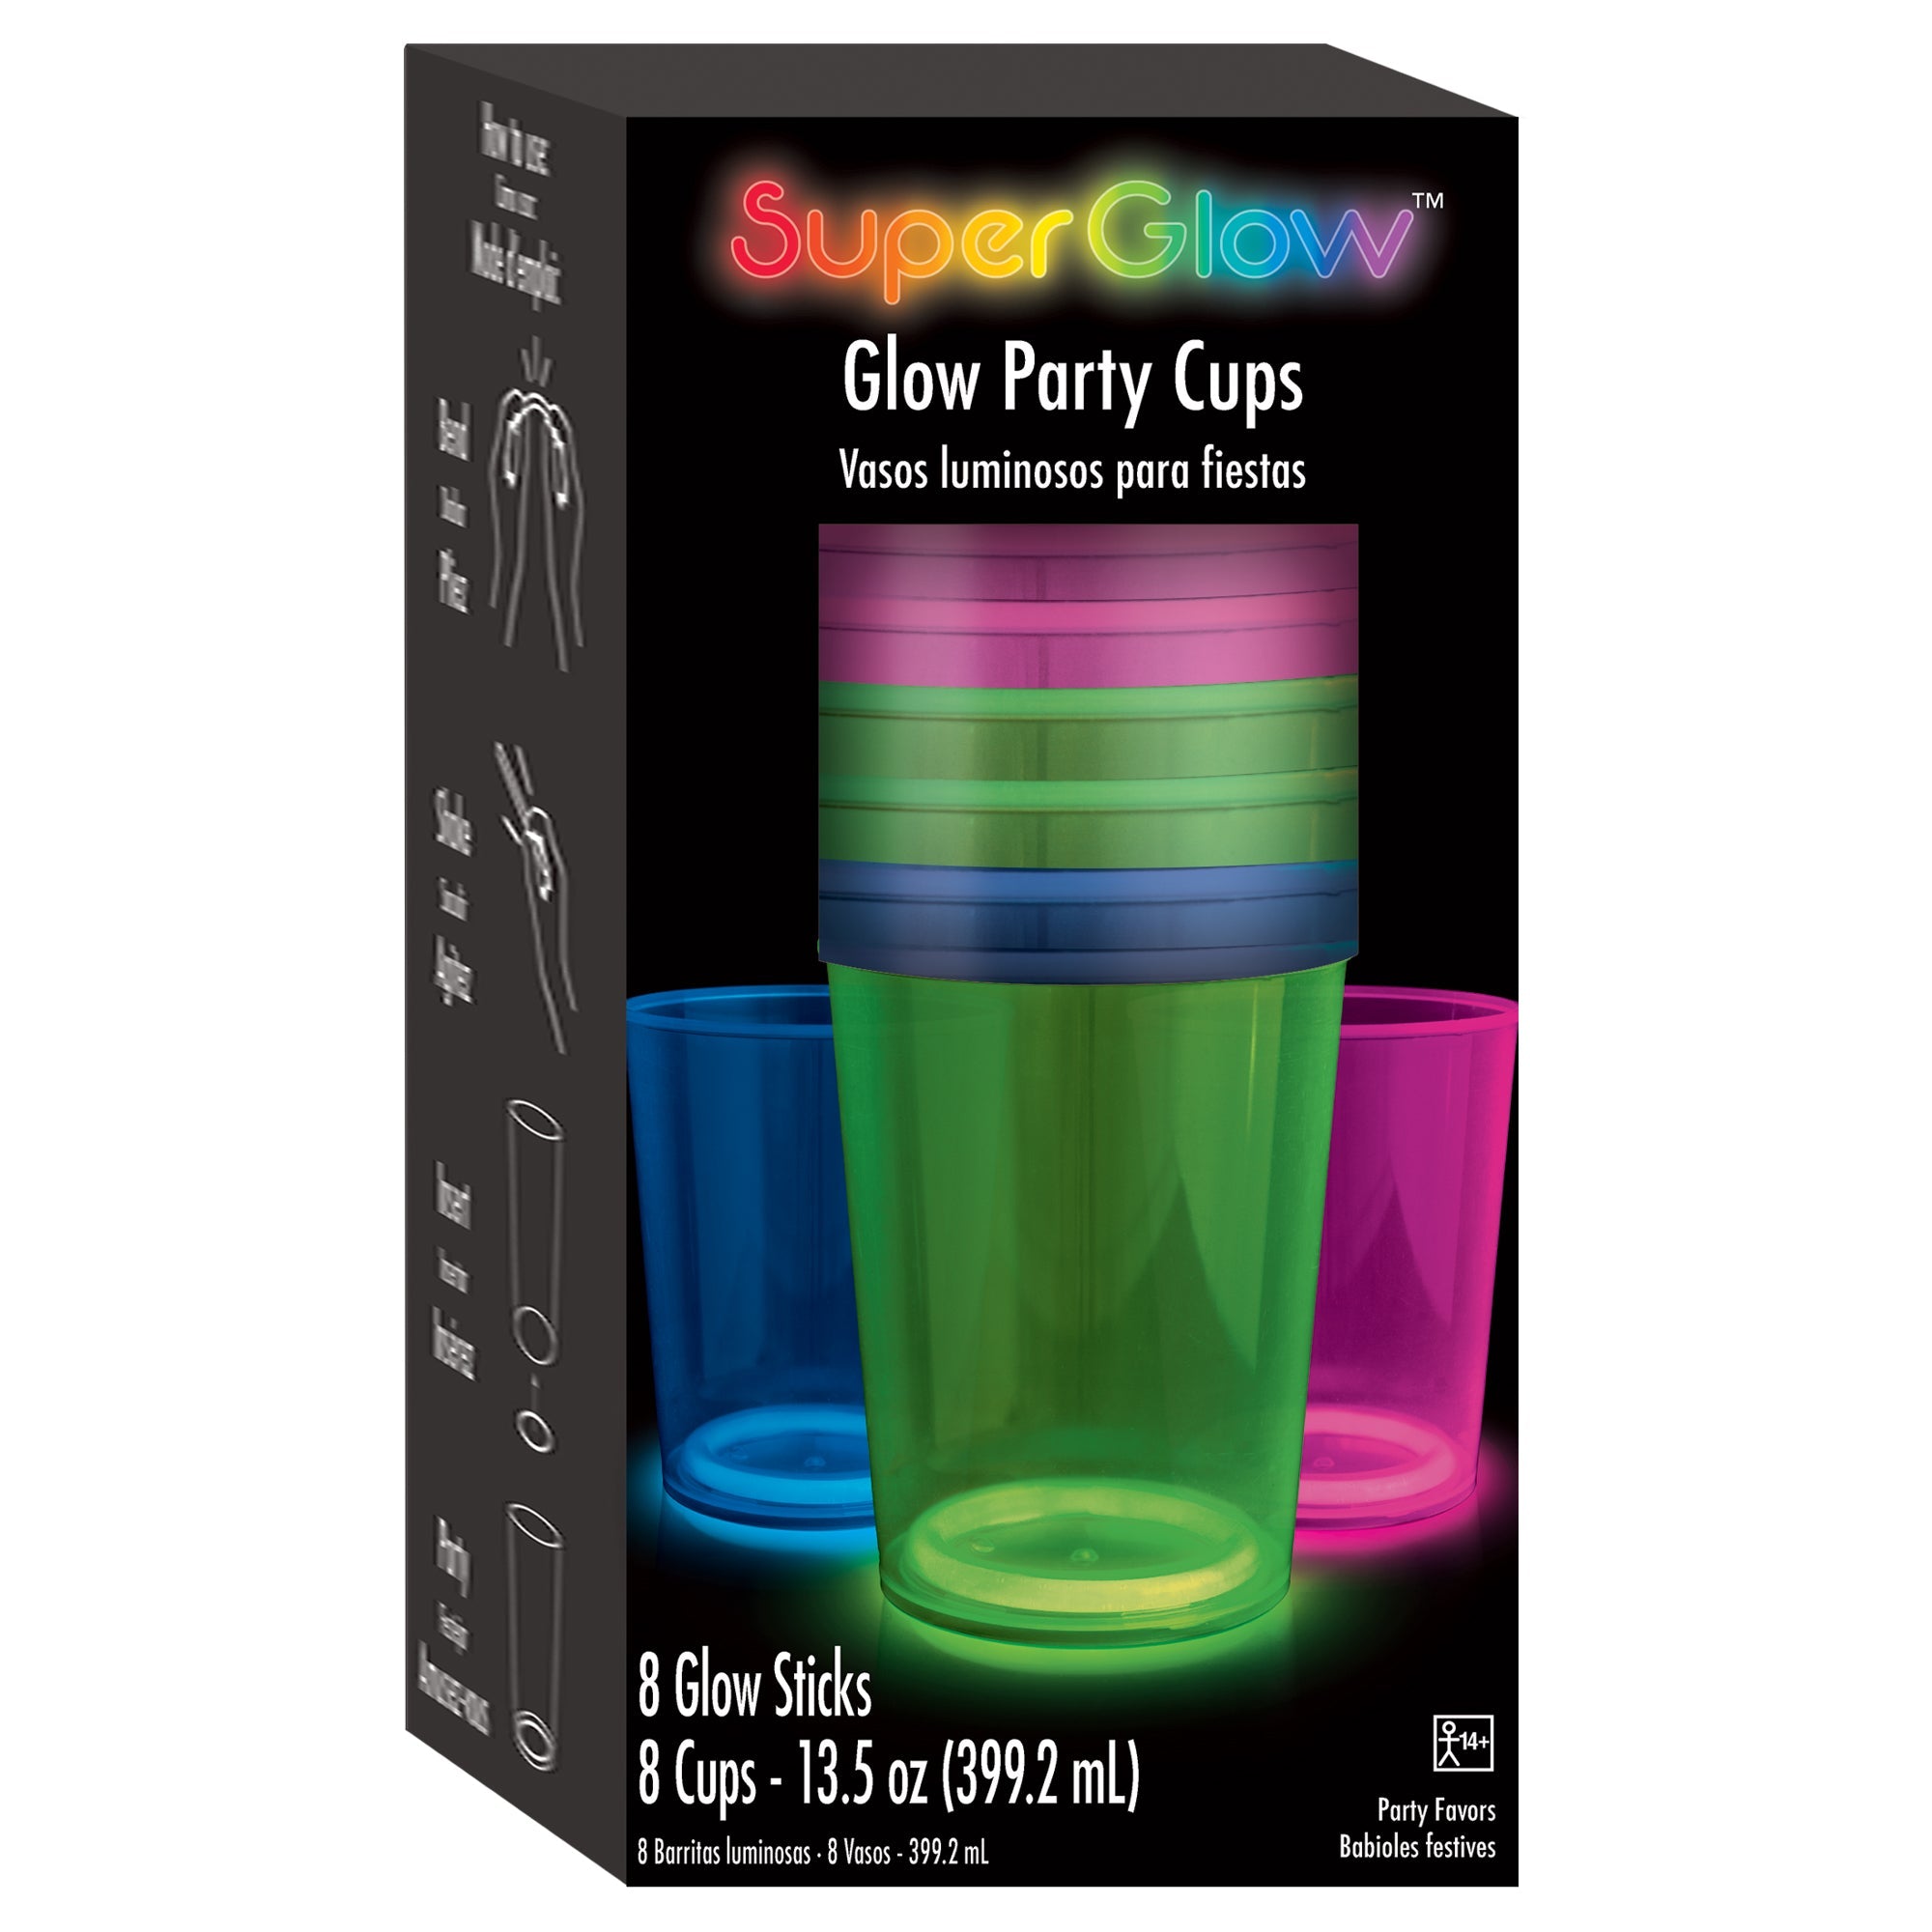 Glow Plastic Cup Multi-Pack 13.5 oz. Cups & 8in Glow Sticks